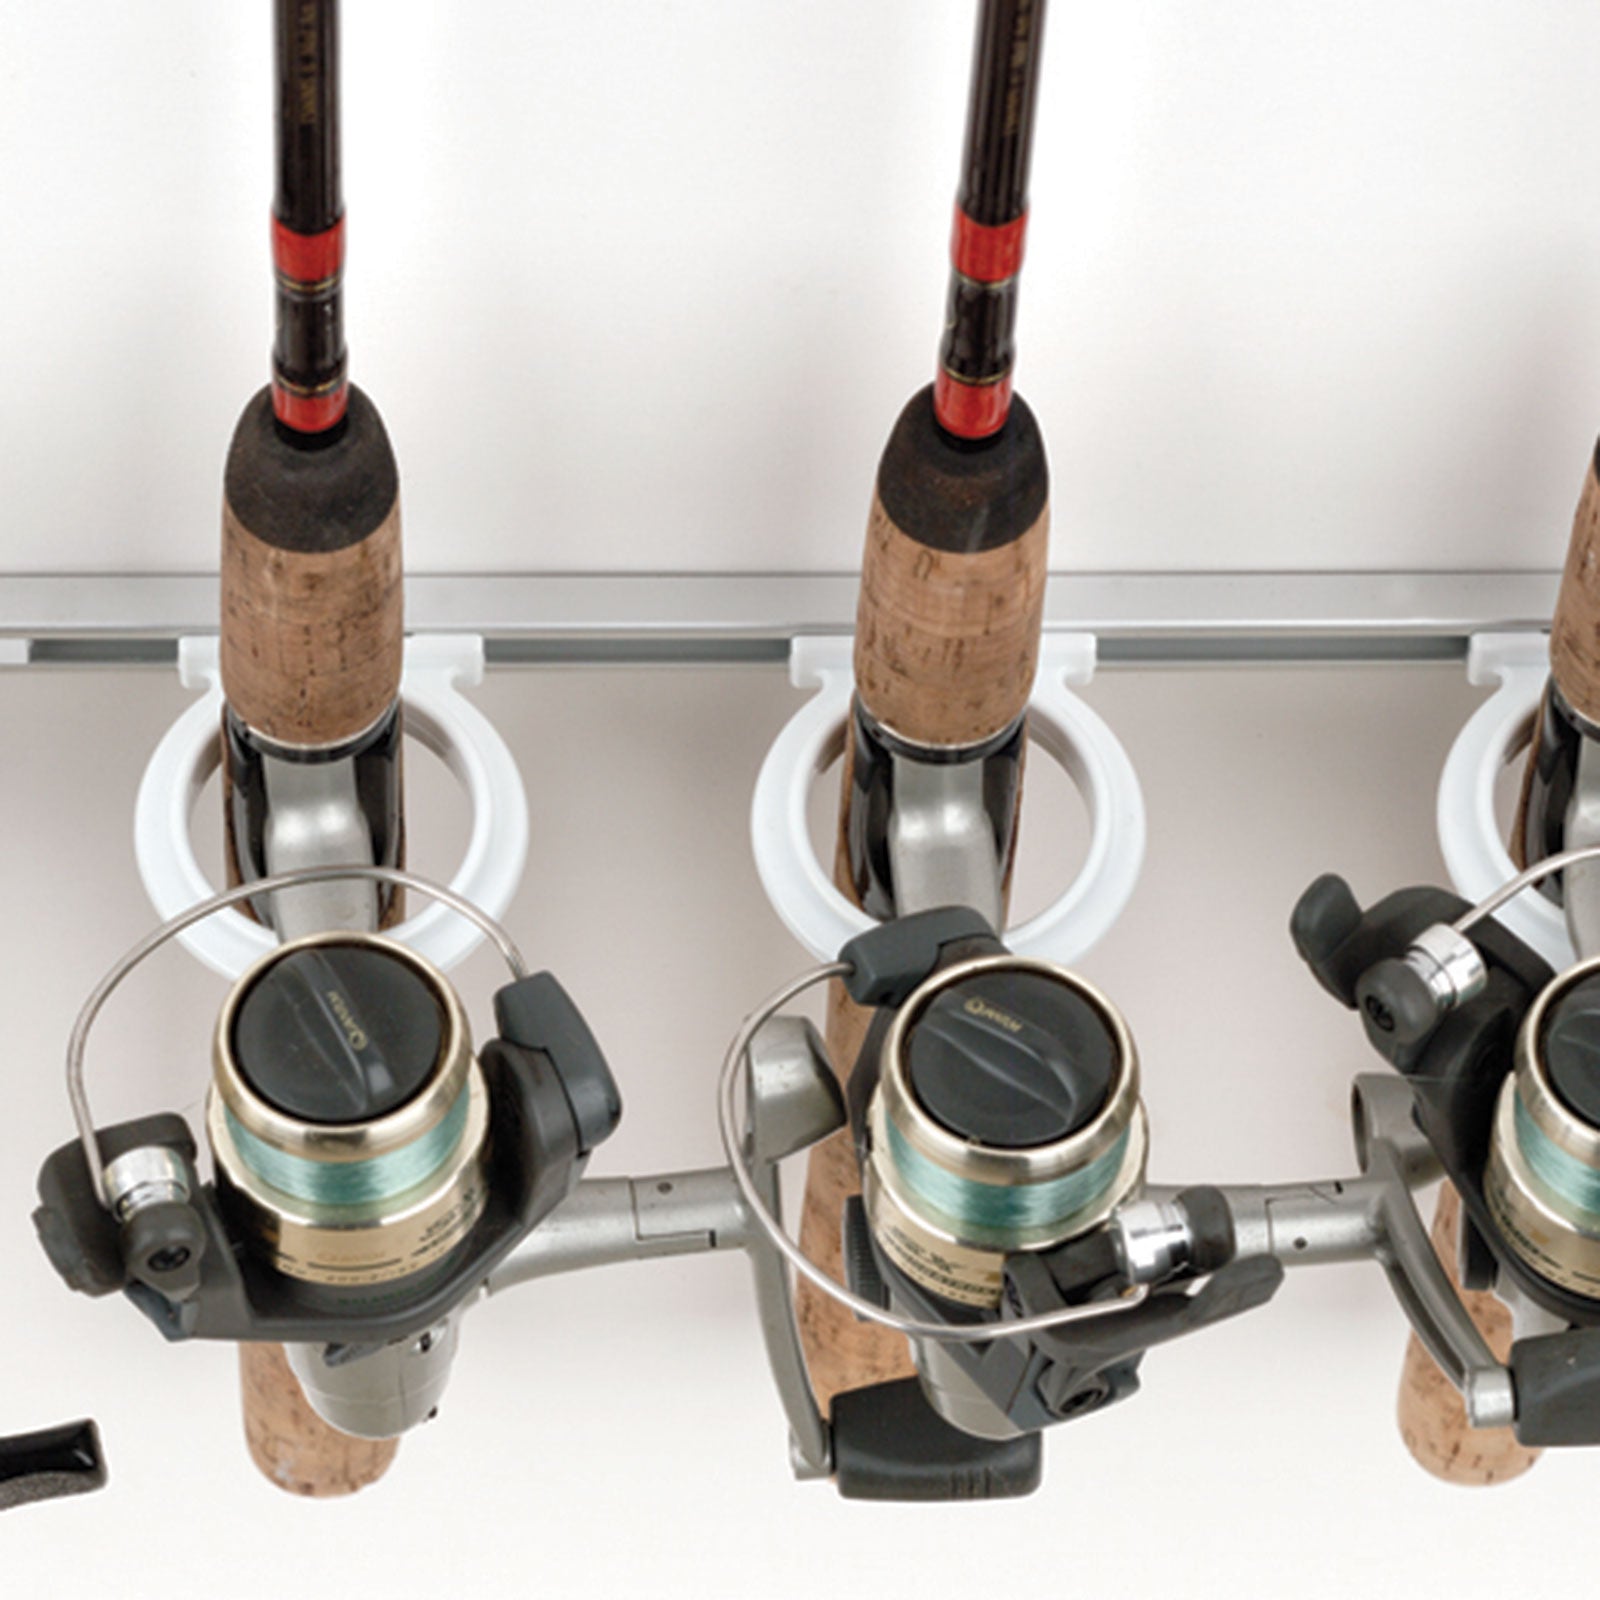 Du-Bro Fishing Trac-A-Rod Storage System, 2-Feet, Silver/White